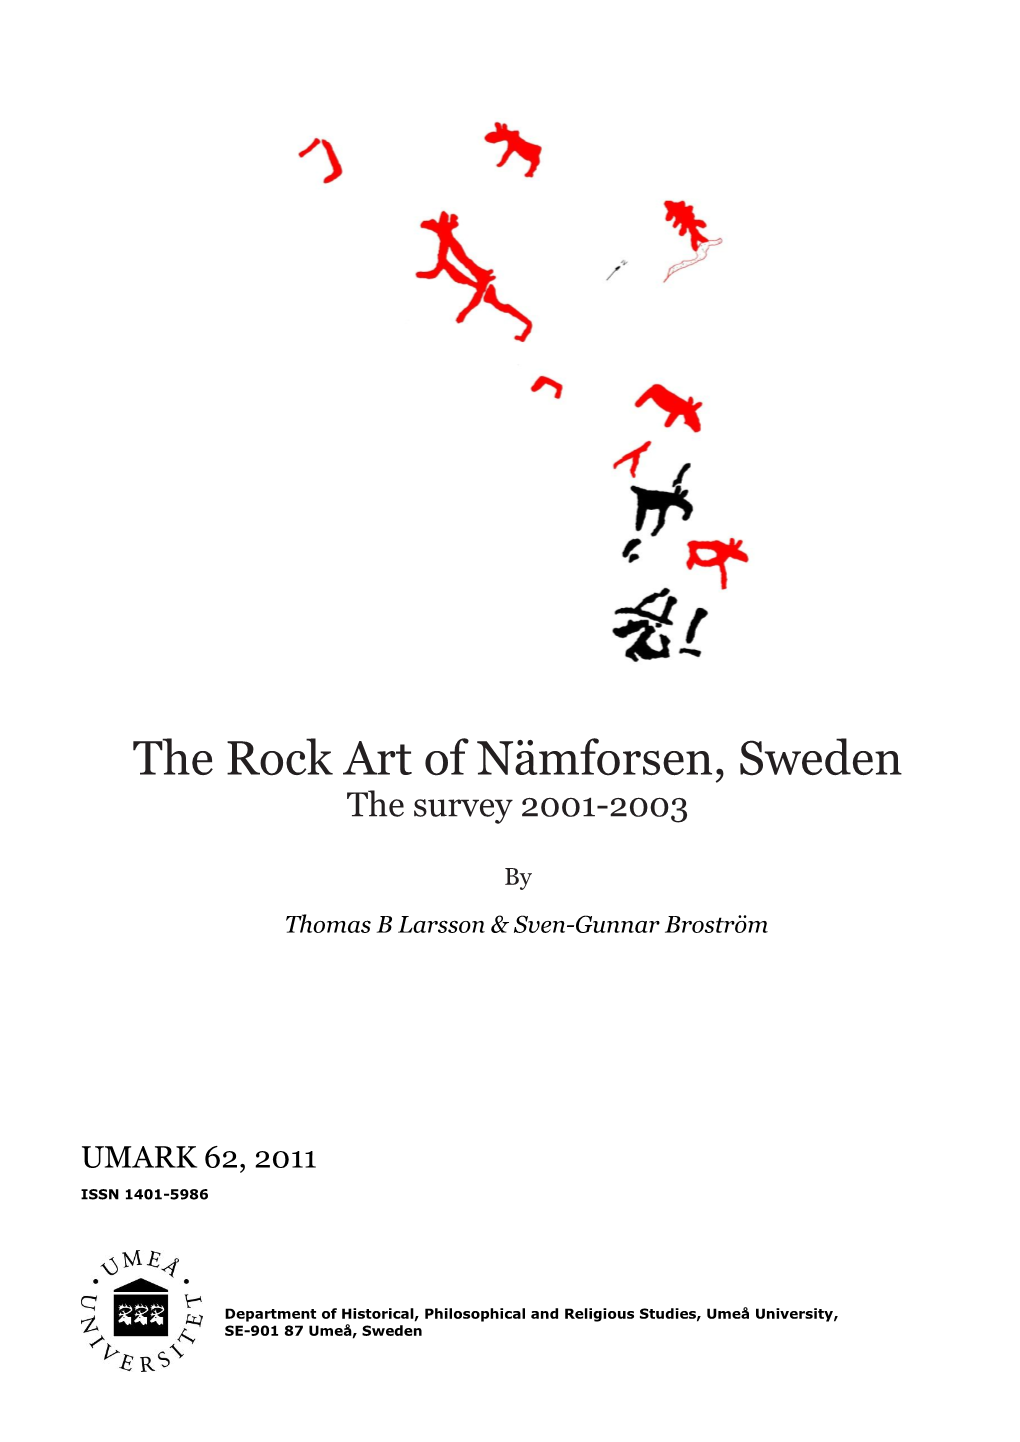 The Rock Art of Nämforsen, Sweden the Survey 2001-2003